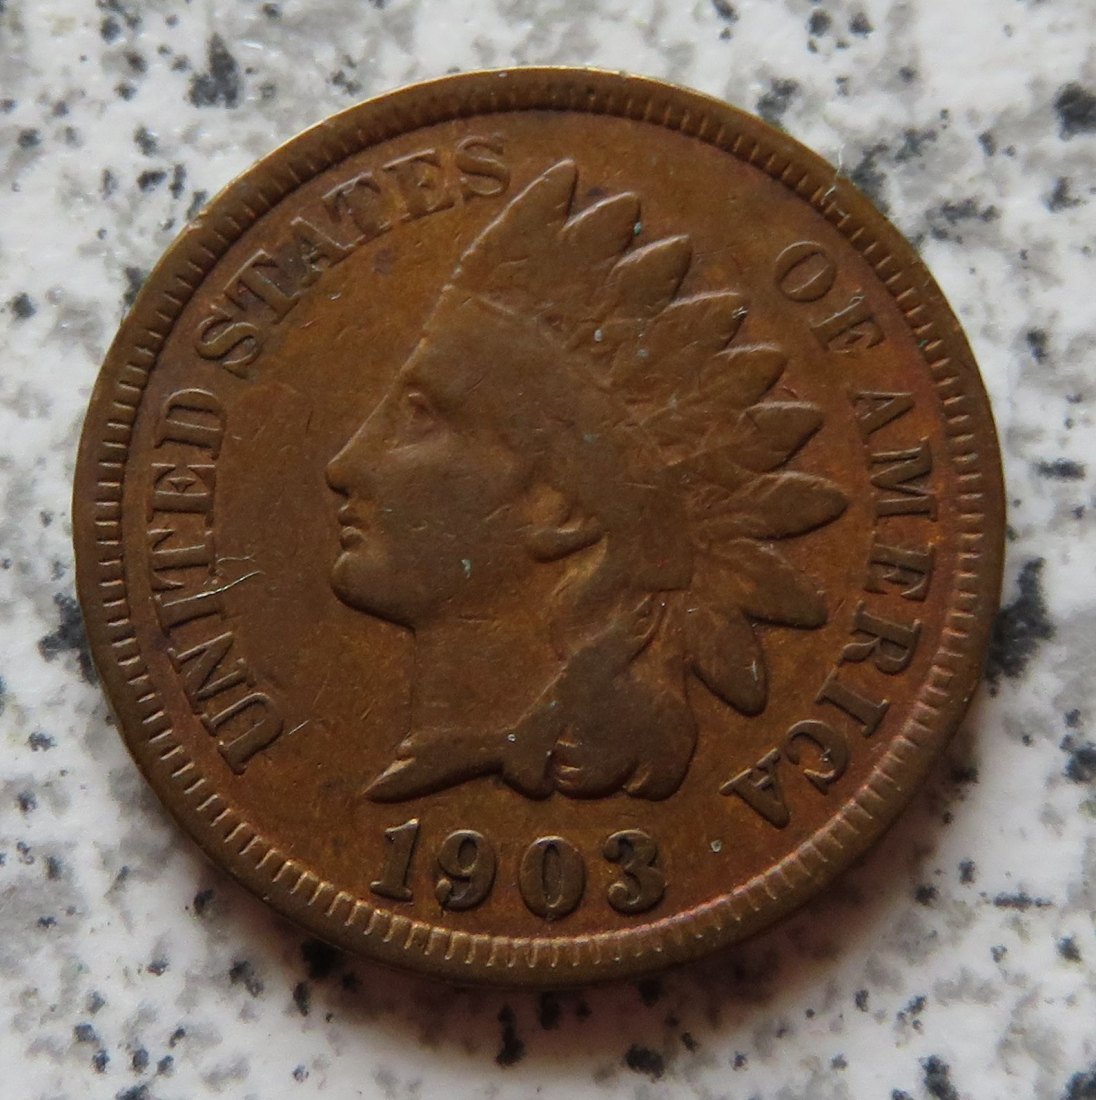  USA Indian Head Cent 1903   